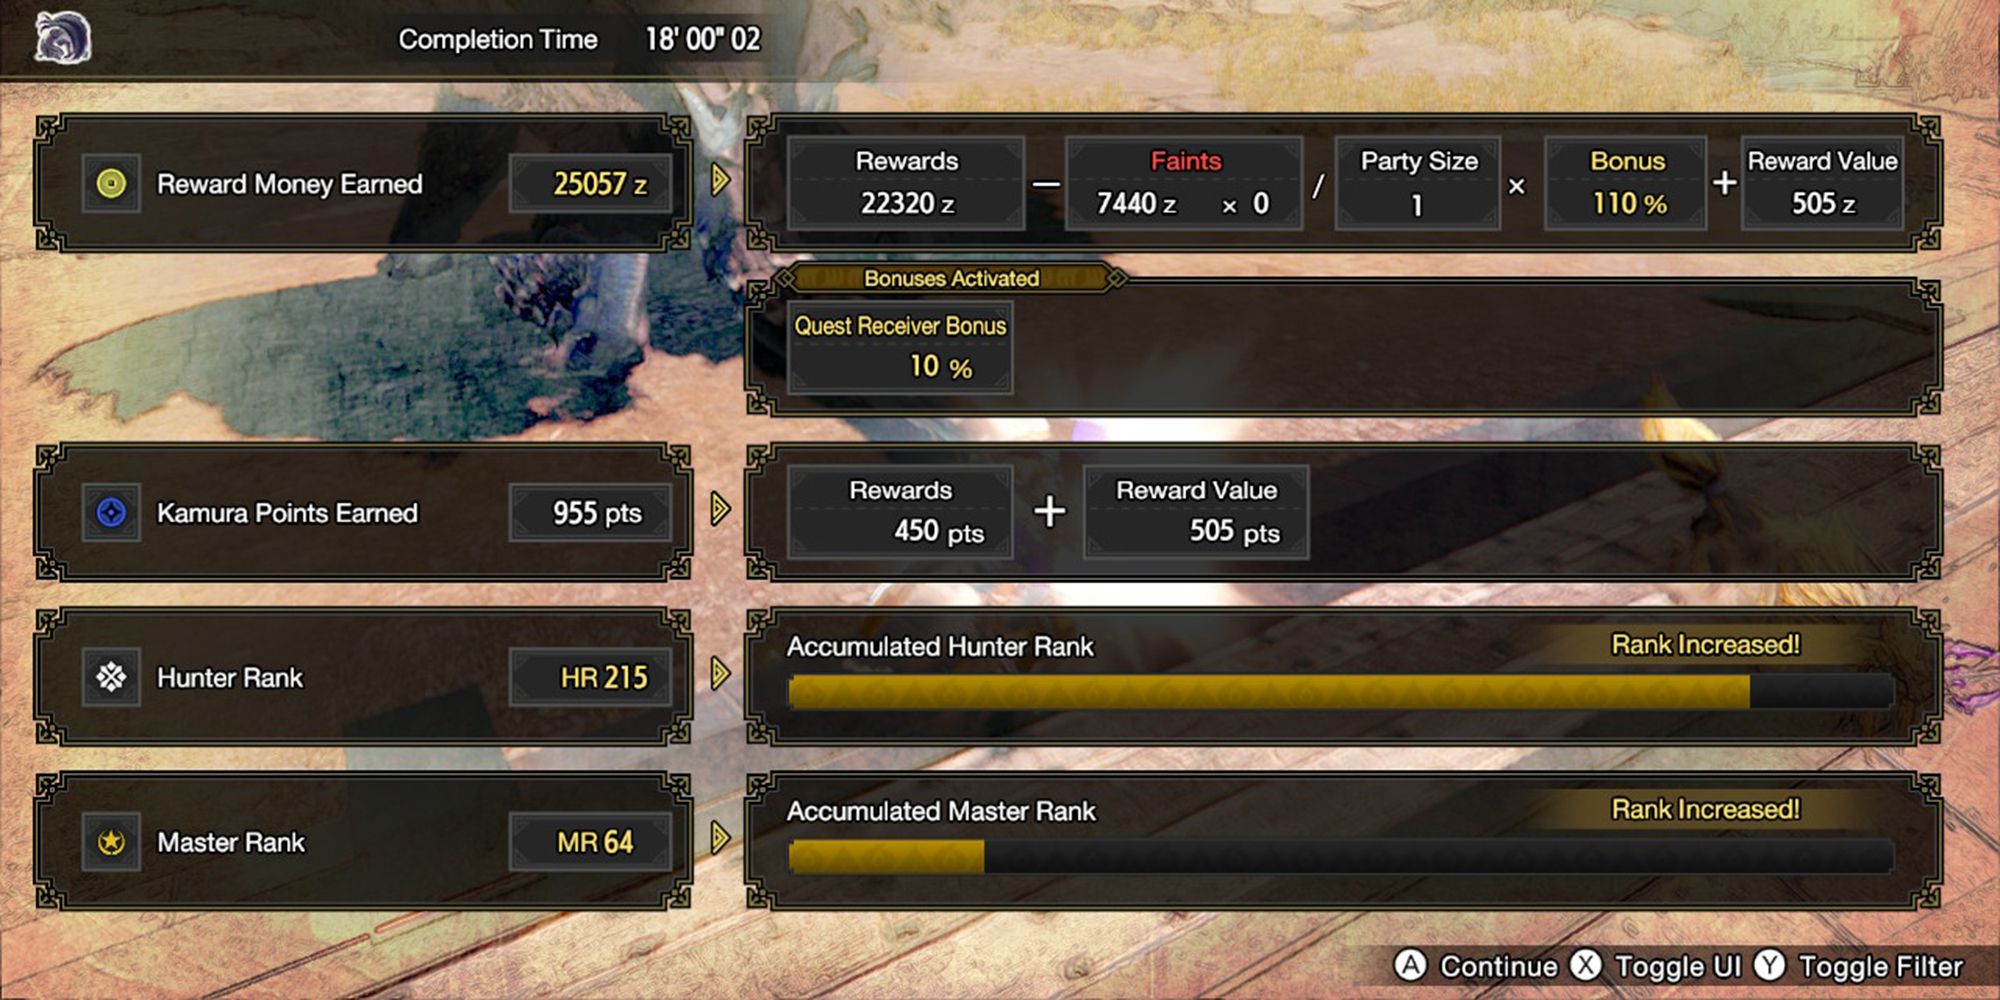 master rank points increase in quest rewards menu